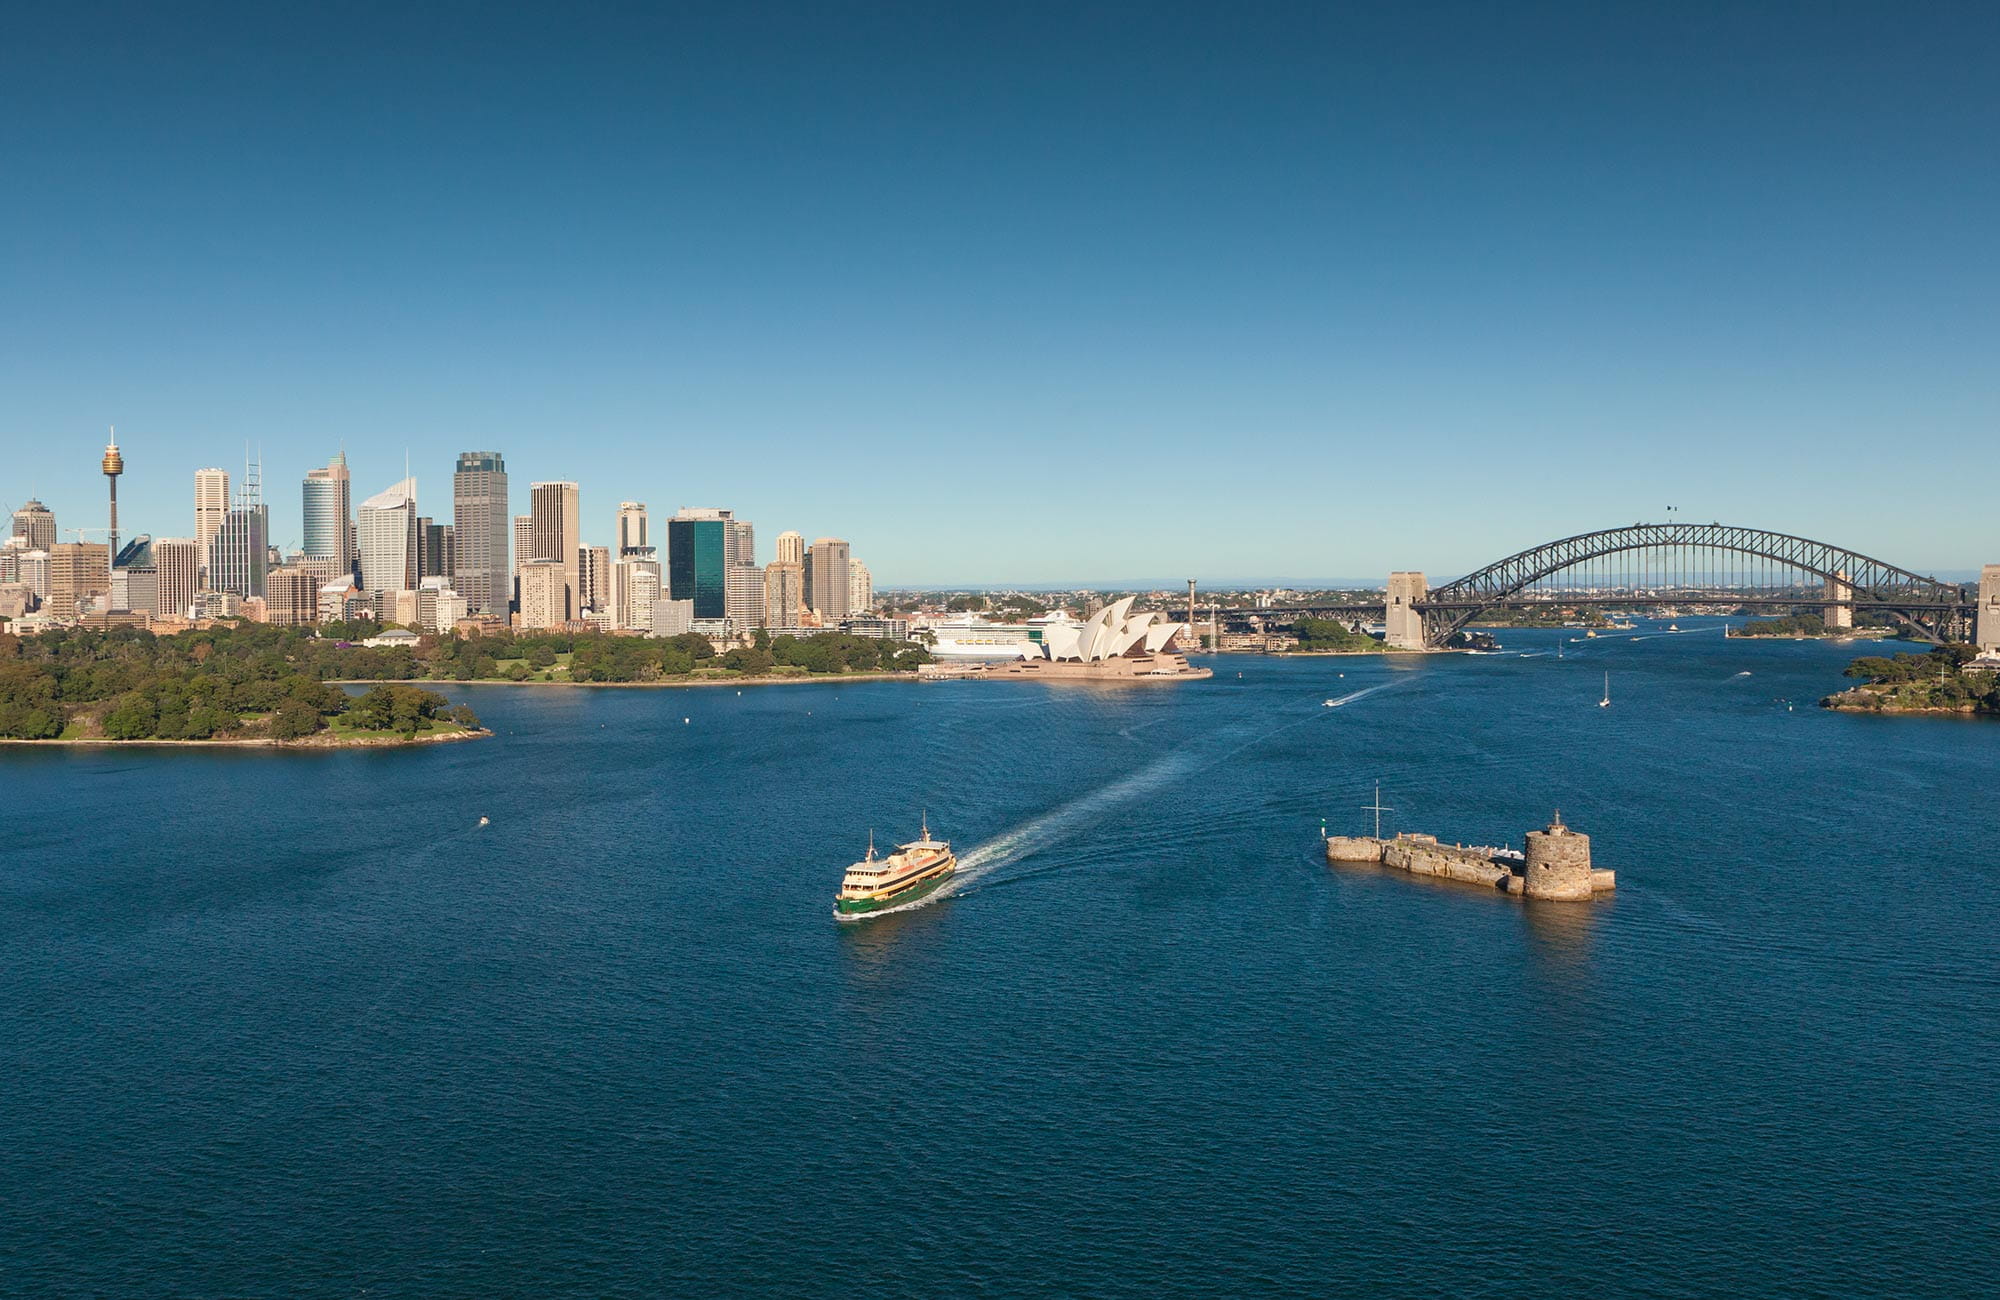 Sydney Harbour National Park. Photo: David Finnegan